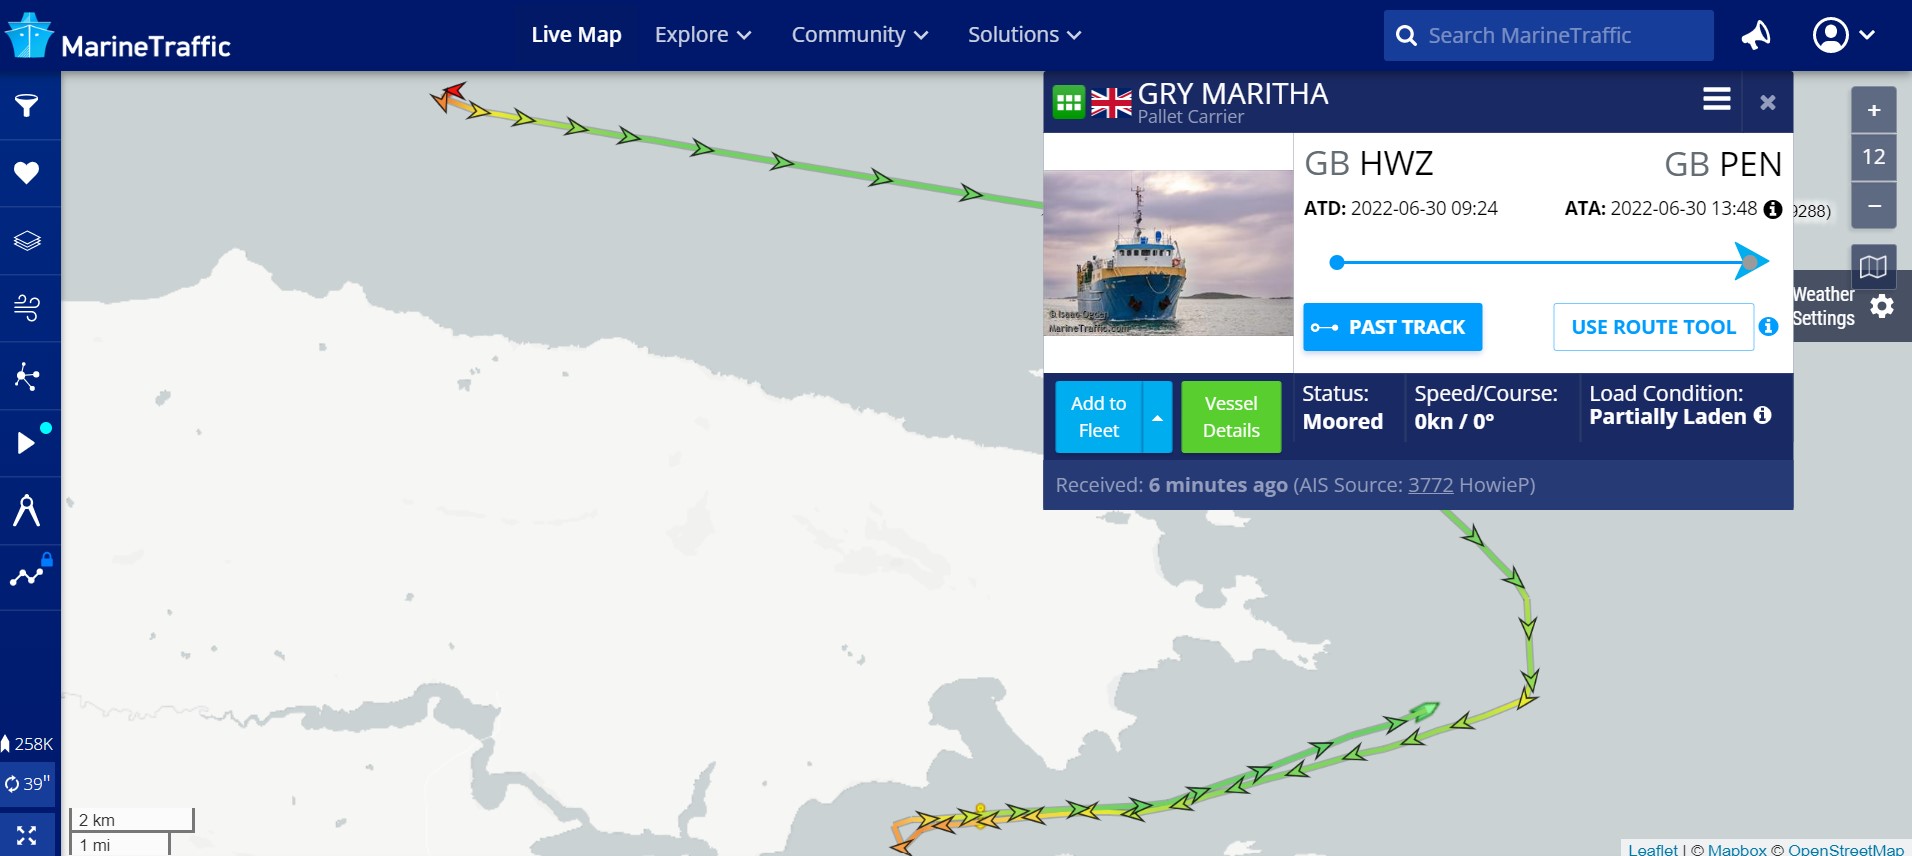 Ship Gry Maritha operates between Penzance and Hugh Town. Source: MarineTraffic